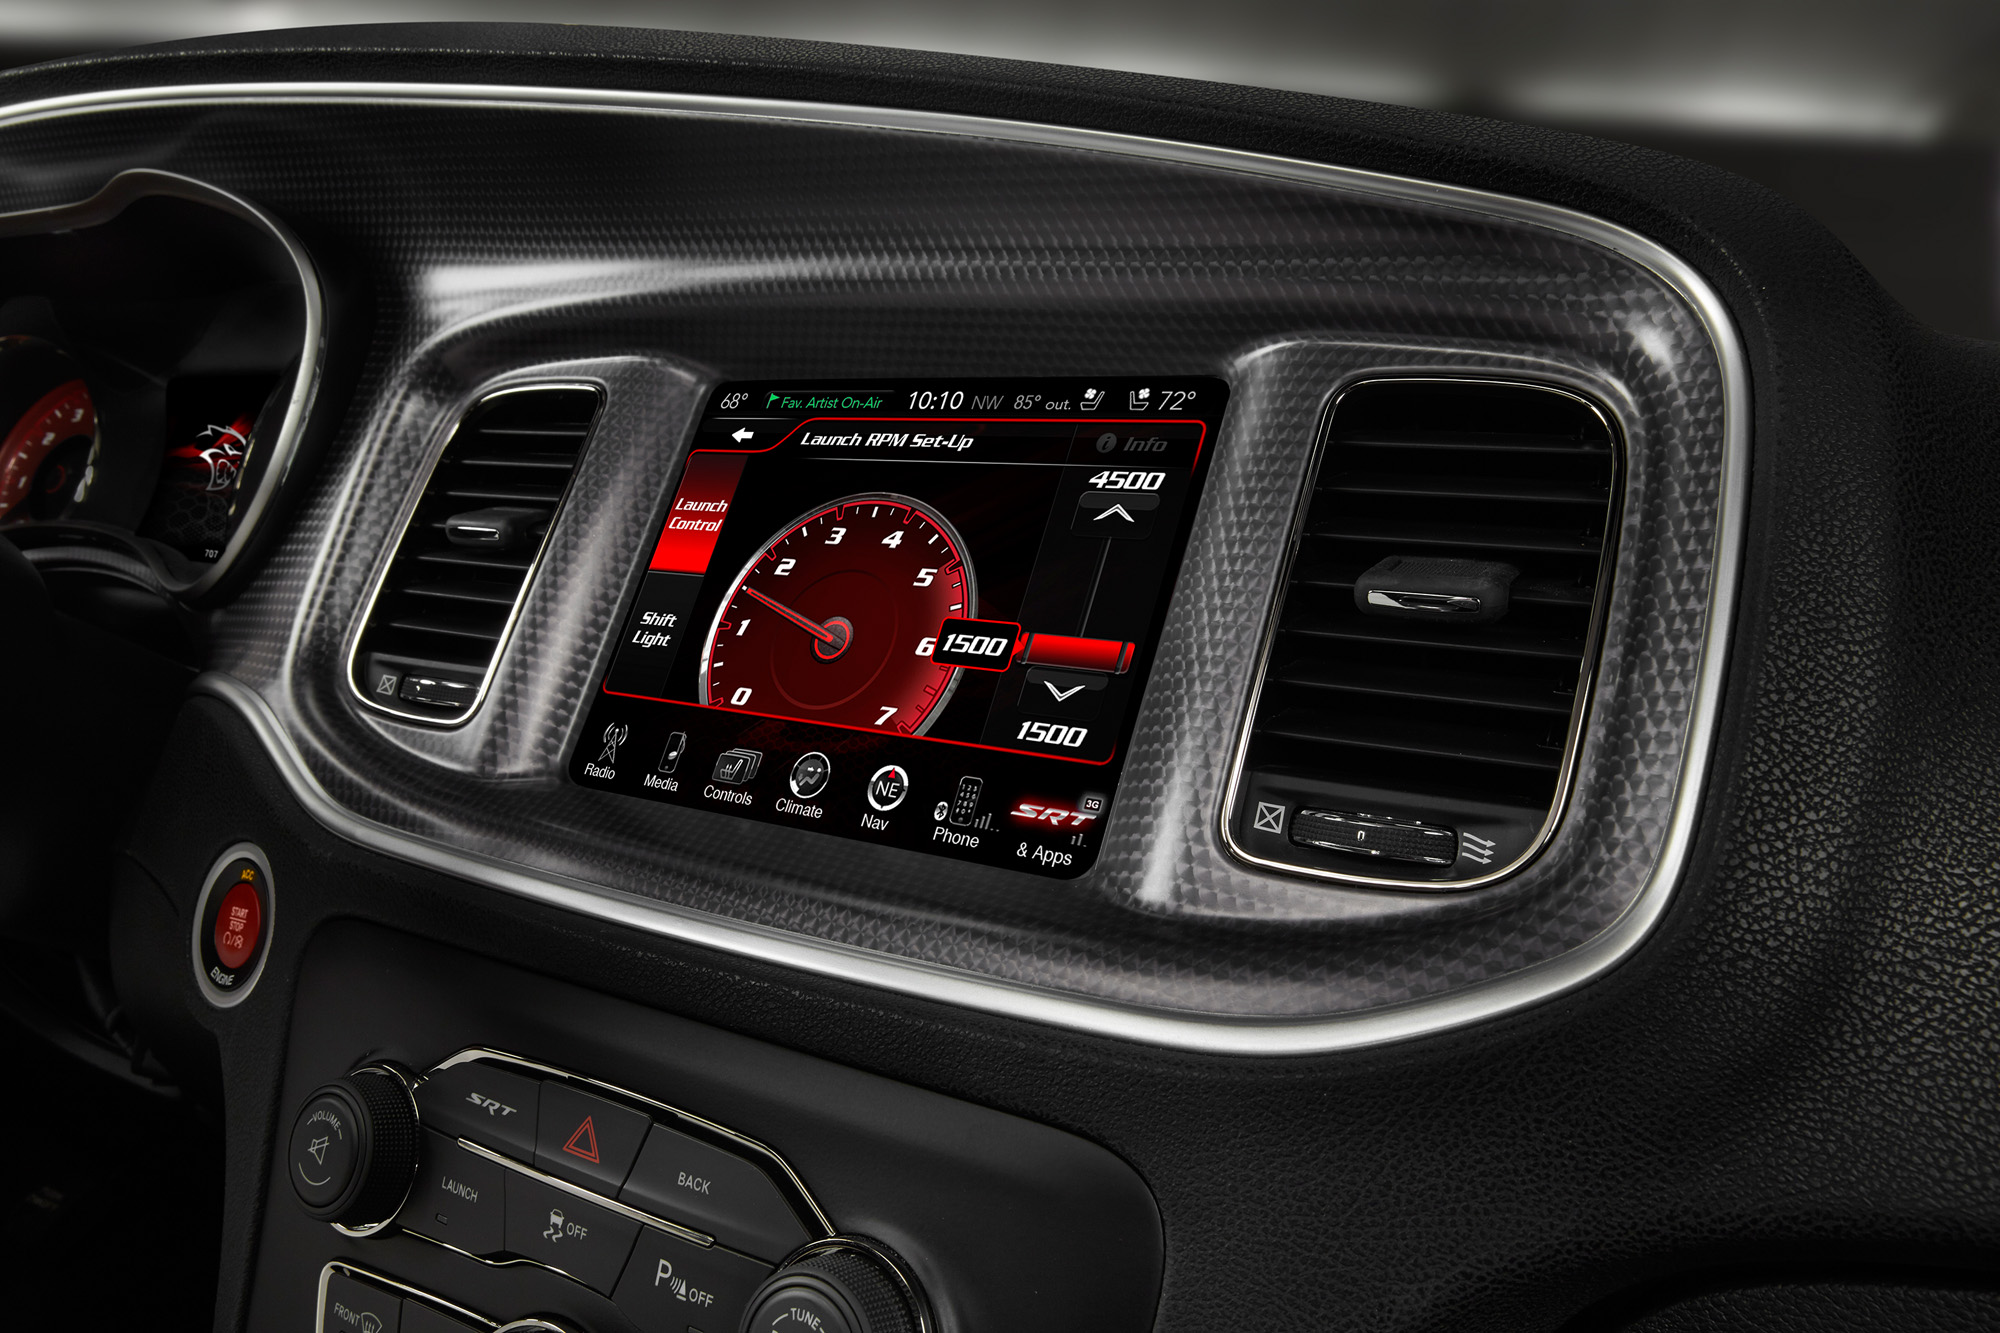 2015 Dodge Charger SRT - Launch Control Setup screen